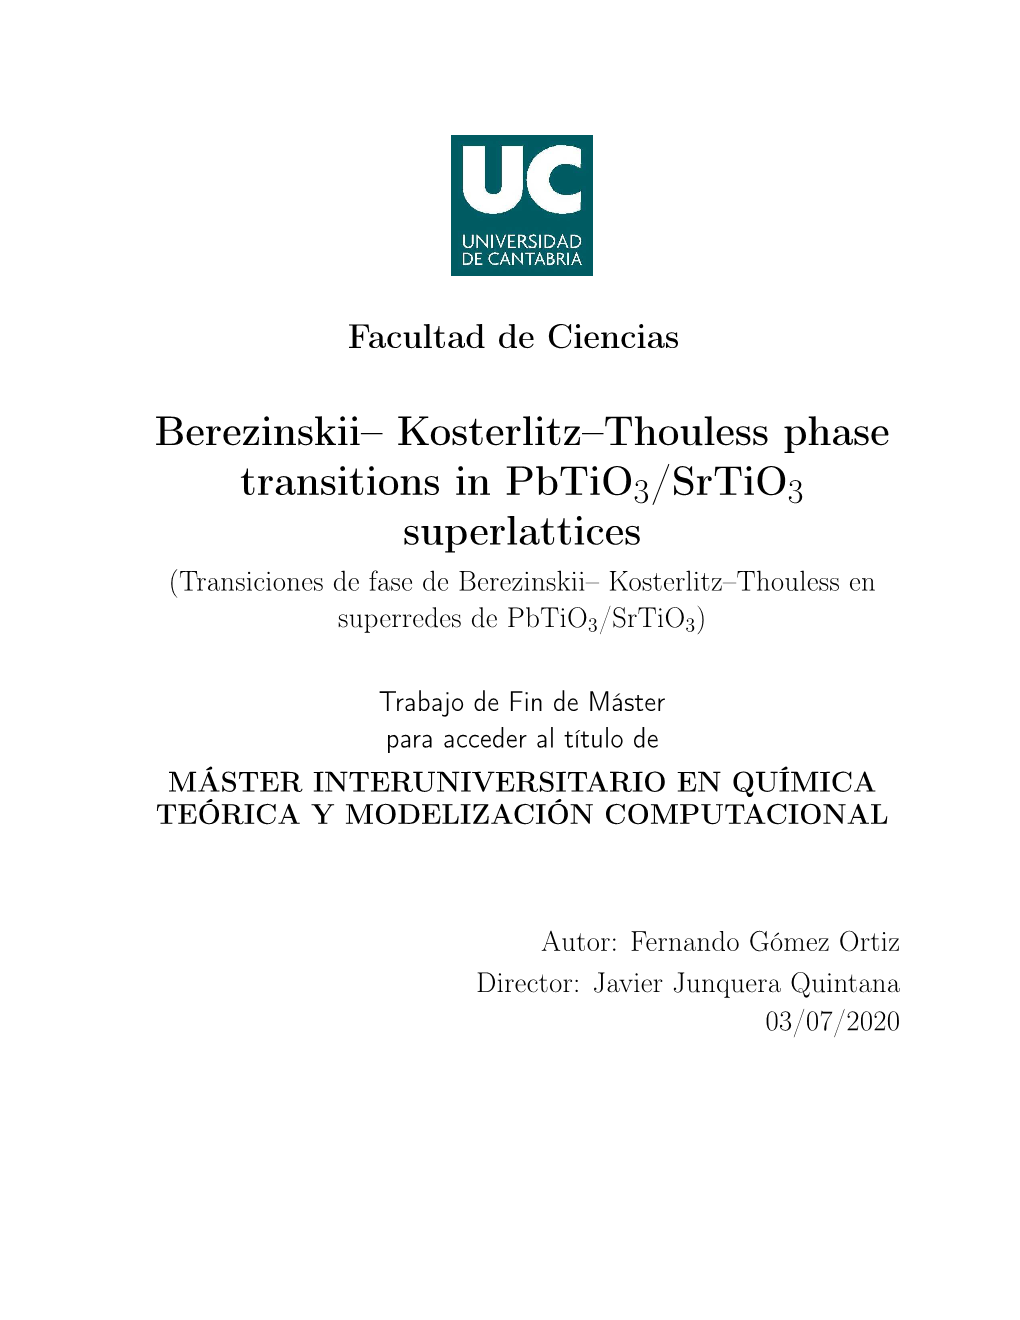 Berezinskii– Kosterlitz–Thouless Phase Transitions in Pbtio3 /Srtio3